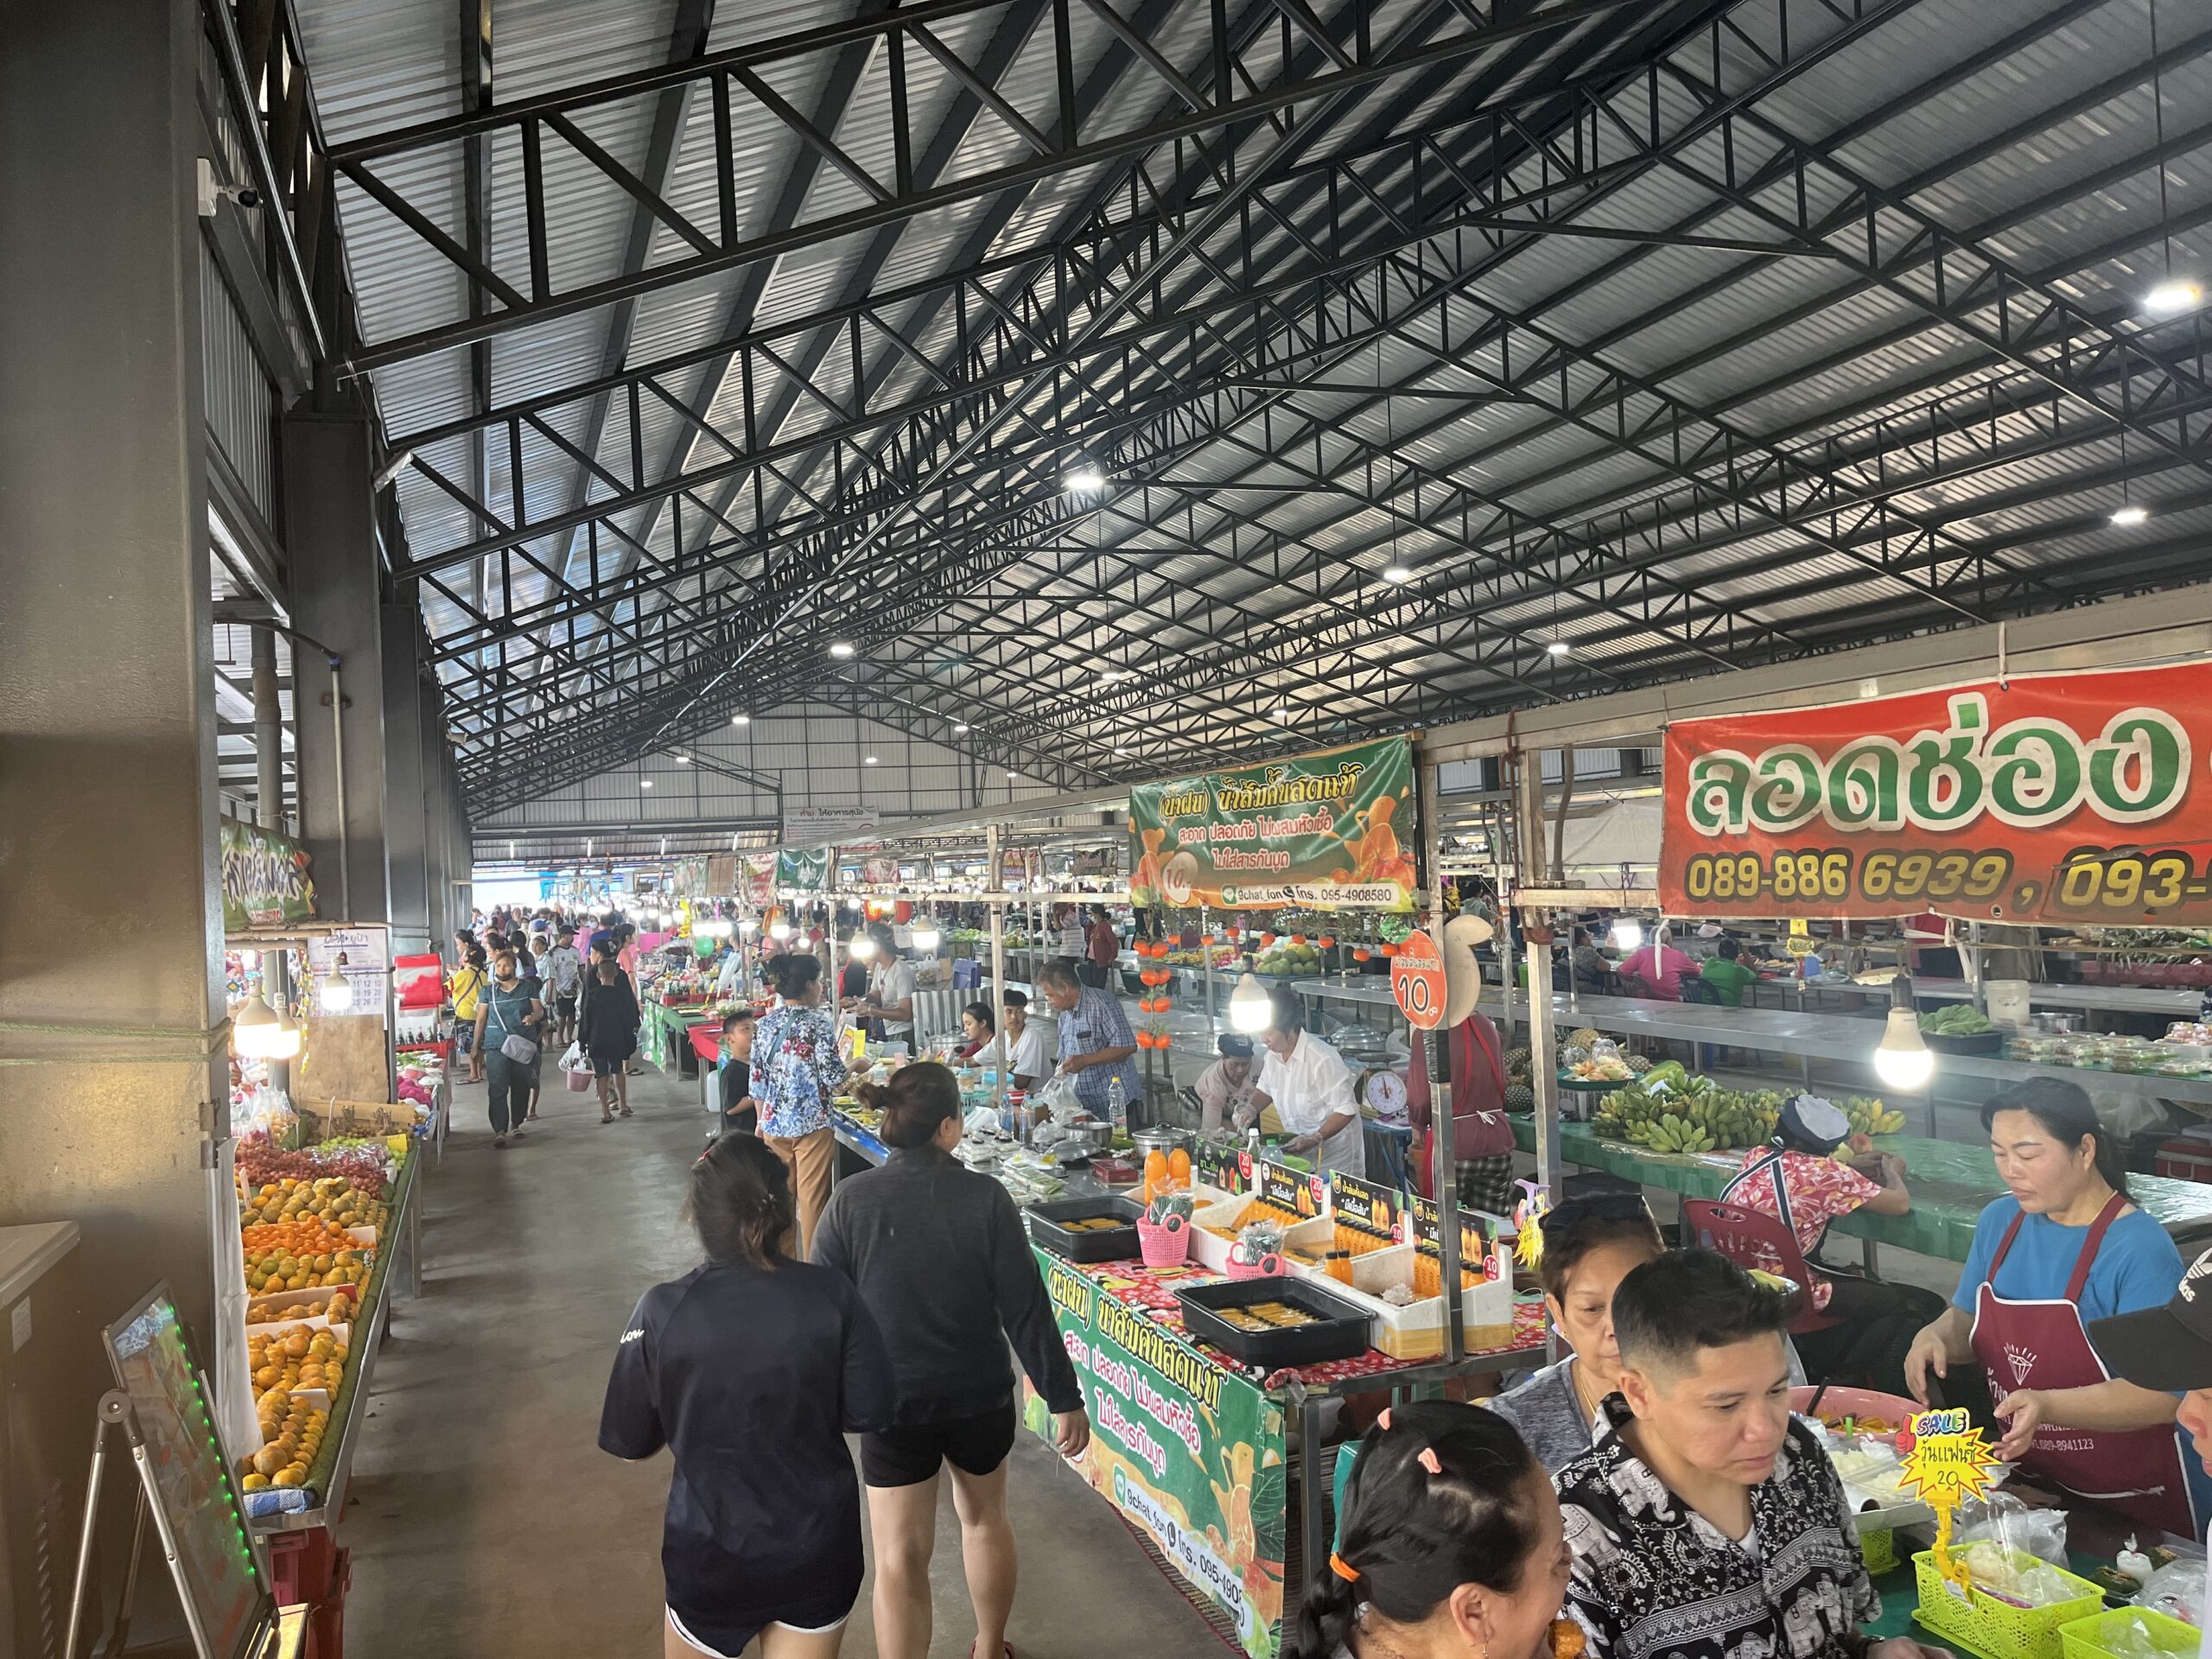 Sasi Thai Market Hosts Street Food Event – March 9 & 10